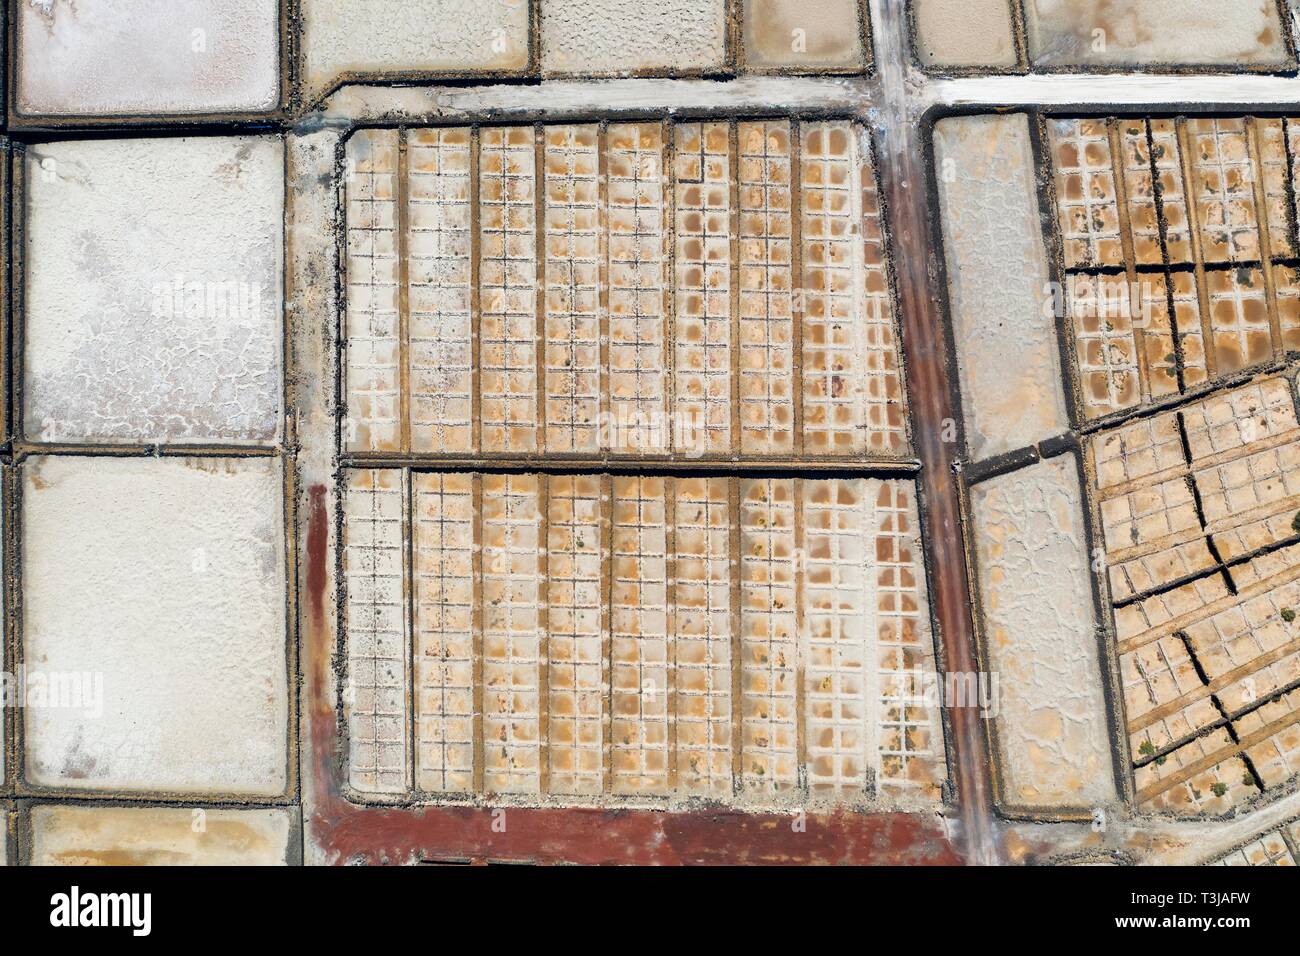 Salt extraction plant, Salinas de Janubio, near Yaiza, drone shot, Lanzarote, Canary Islands, Spain Stock Photo